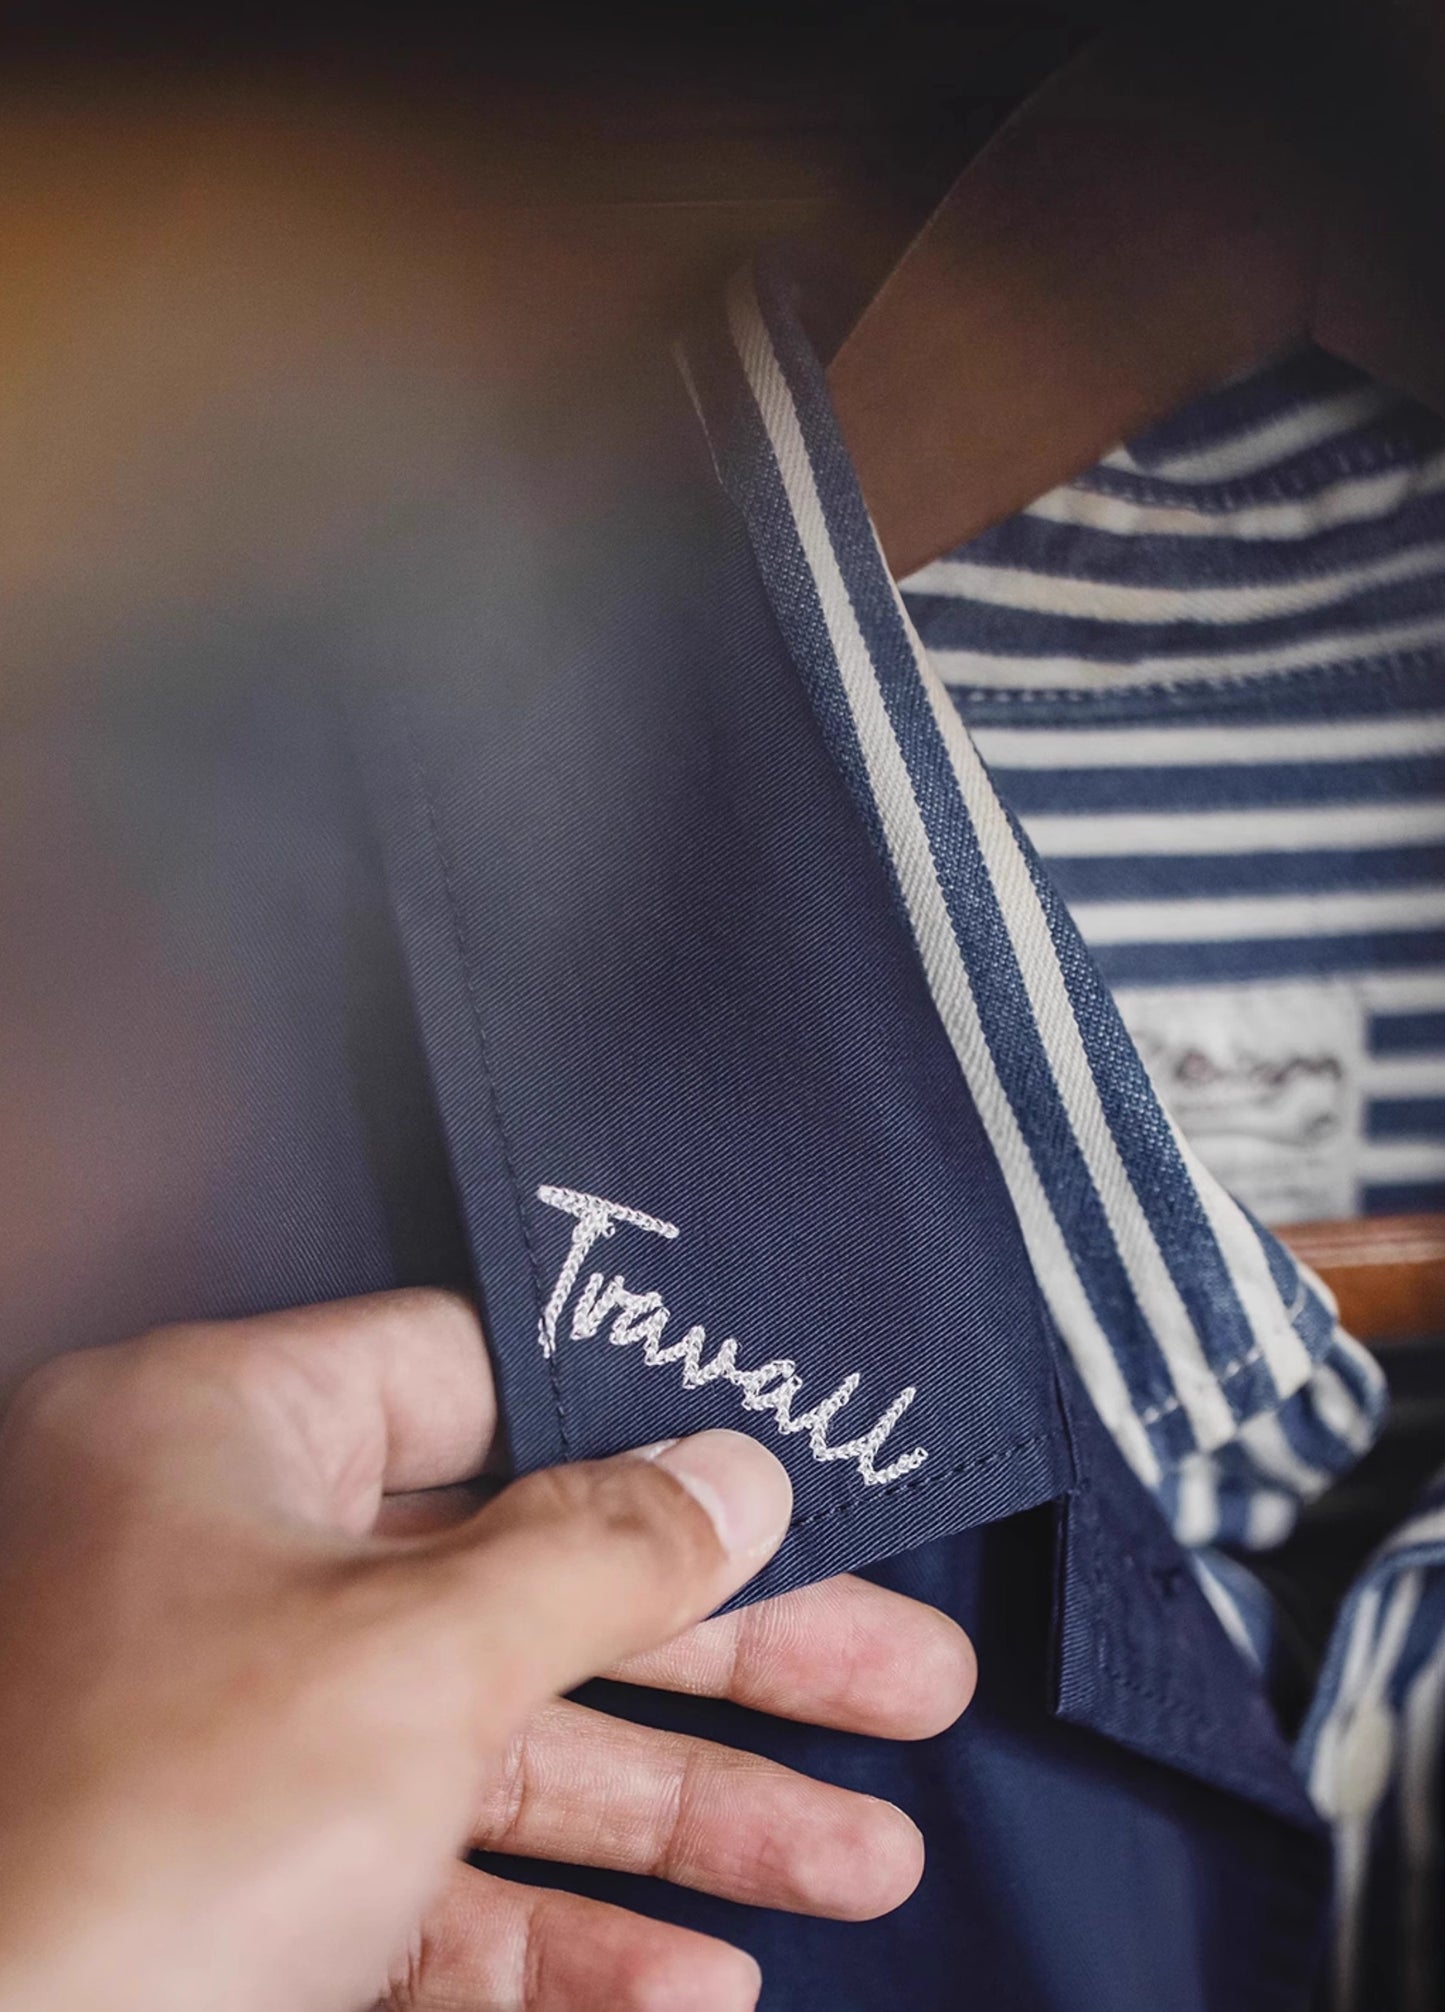 French Retro Embroidered Brushed multi-pocket Men's Jacket